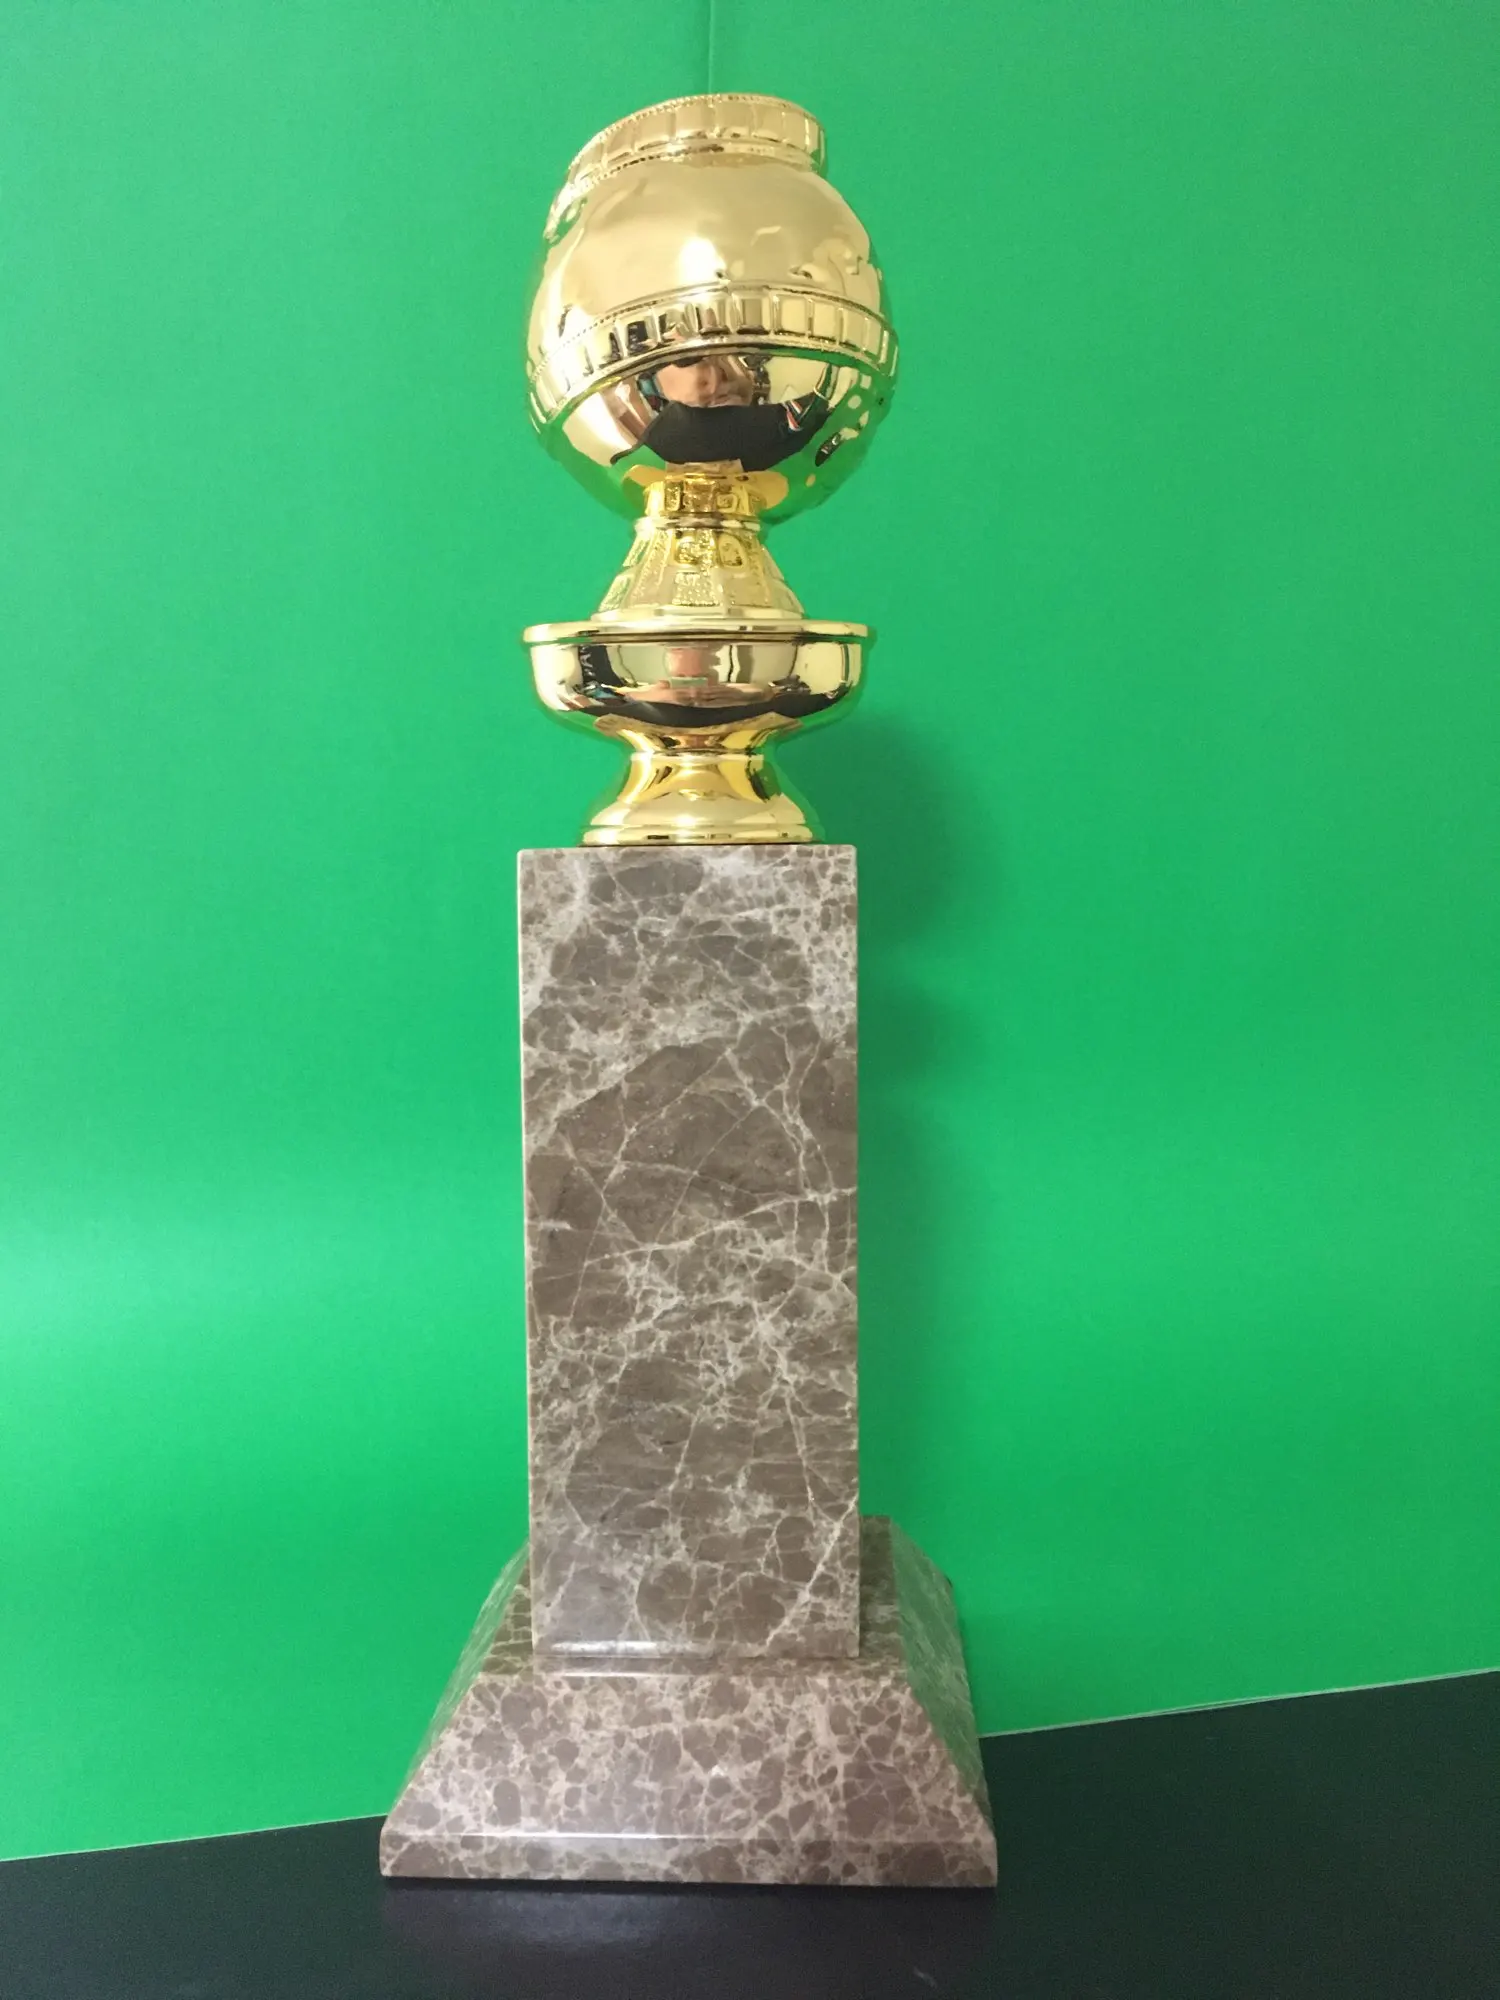 

2021 New 24K Real 1:1 Zinc Alloy Golden Globe Awards replica Zinc Diecast Golden Globe Trophy Souvenirs Awards for Movie trophy